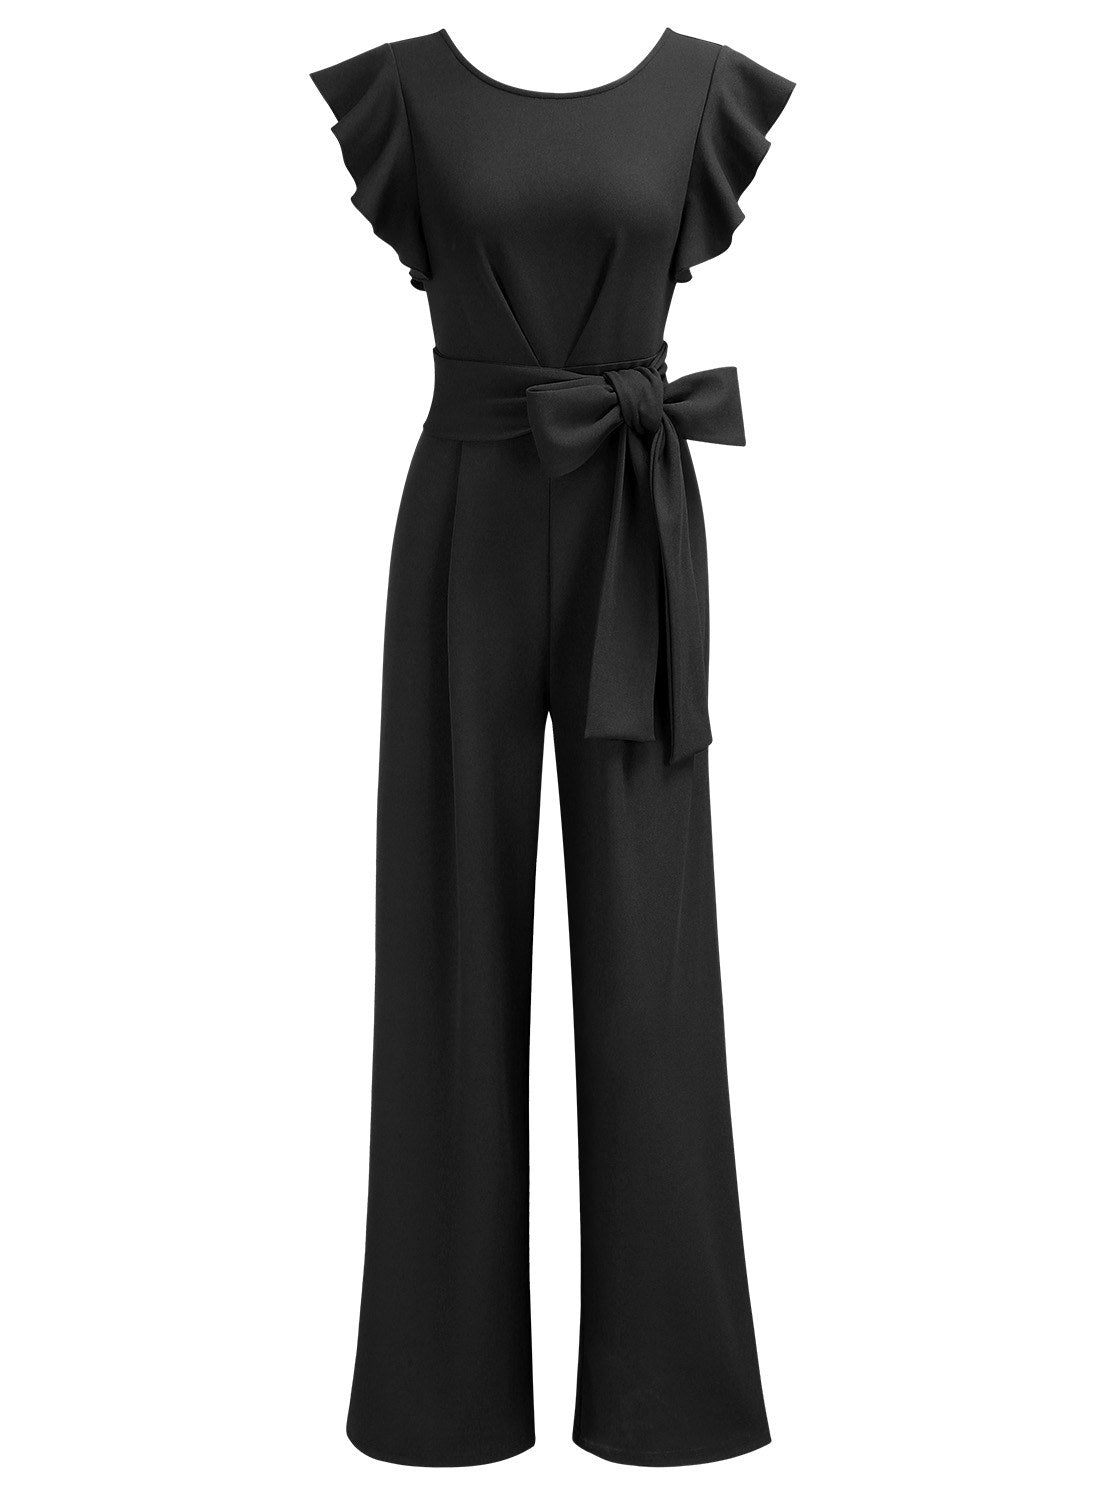 Knitee Women's Vintage Sleeveless Ruffle Formal Long Jumpsuit with Belt